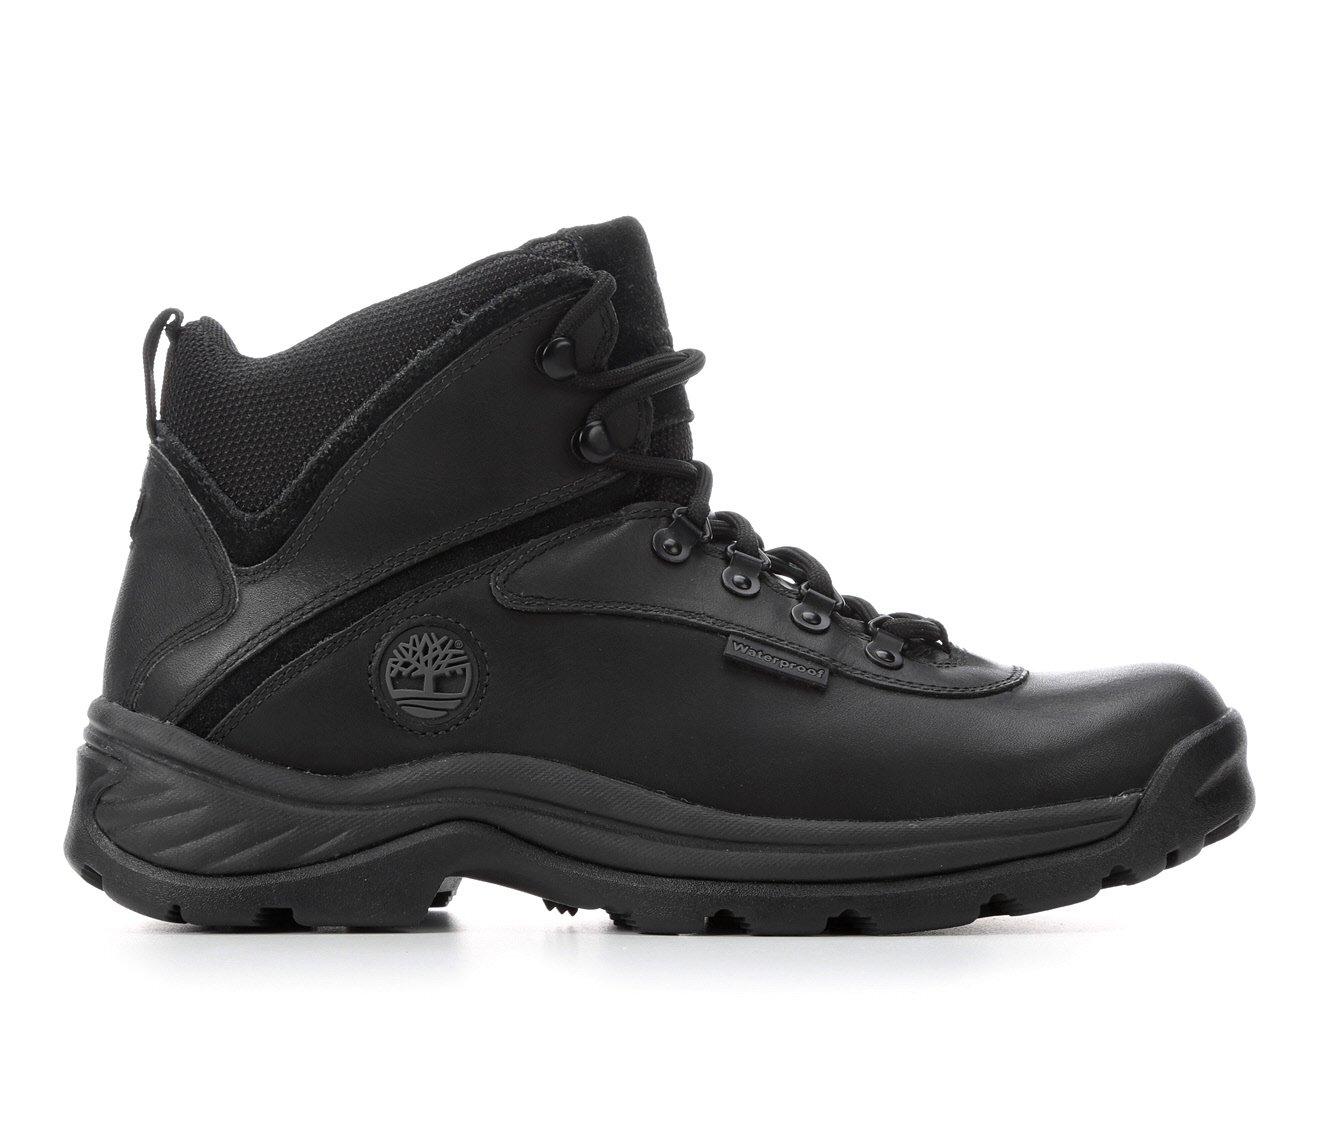 Men's Timberland White Ledge Waterproof Hiking Boots | Shoe Carnival